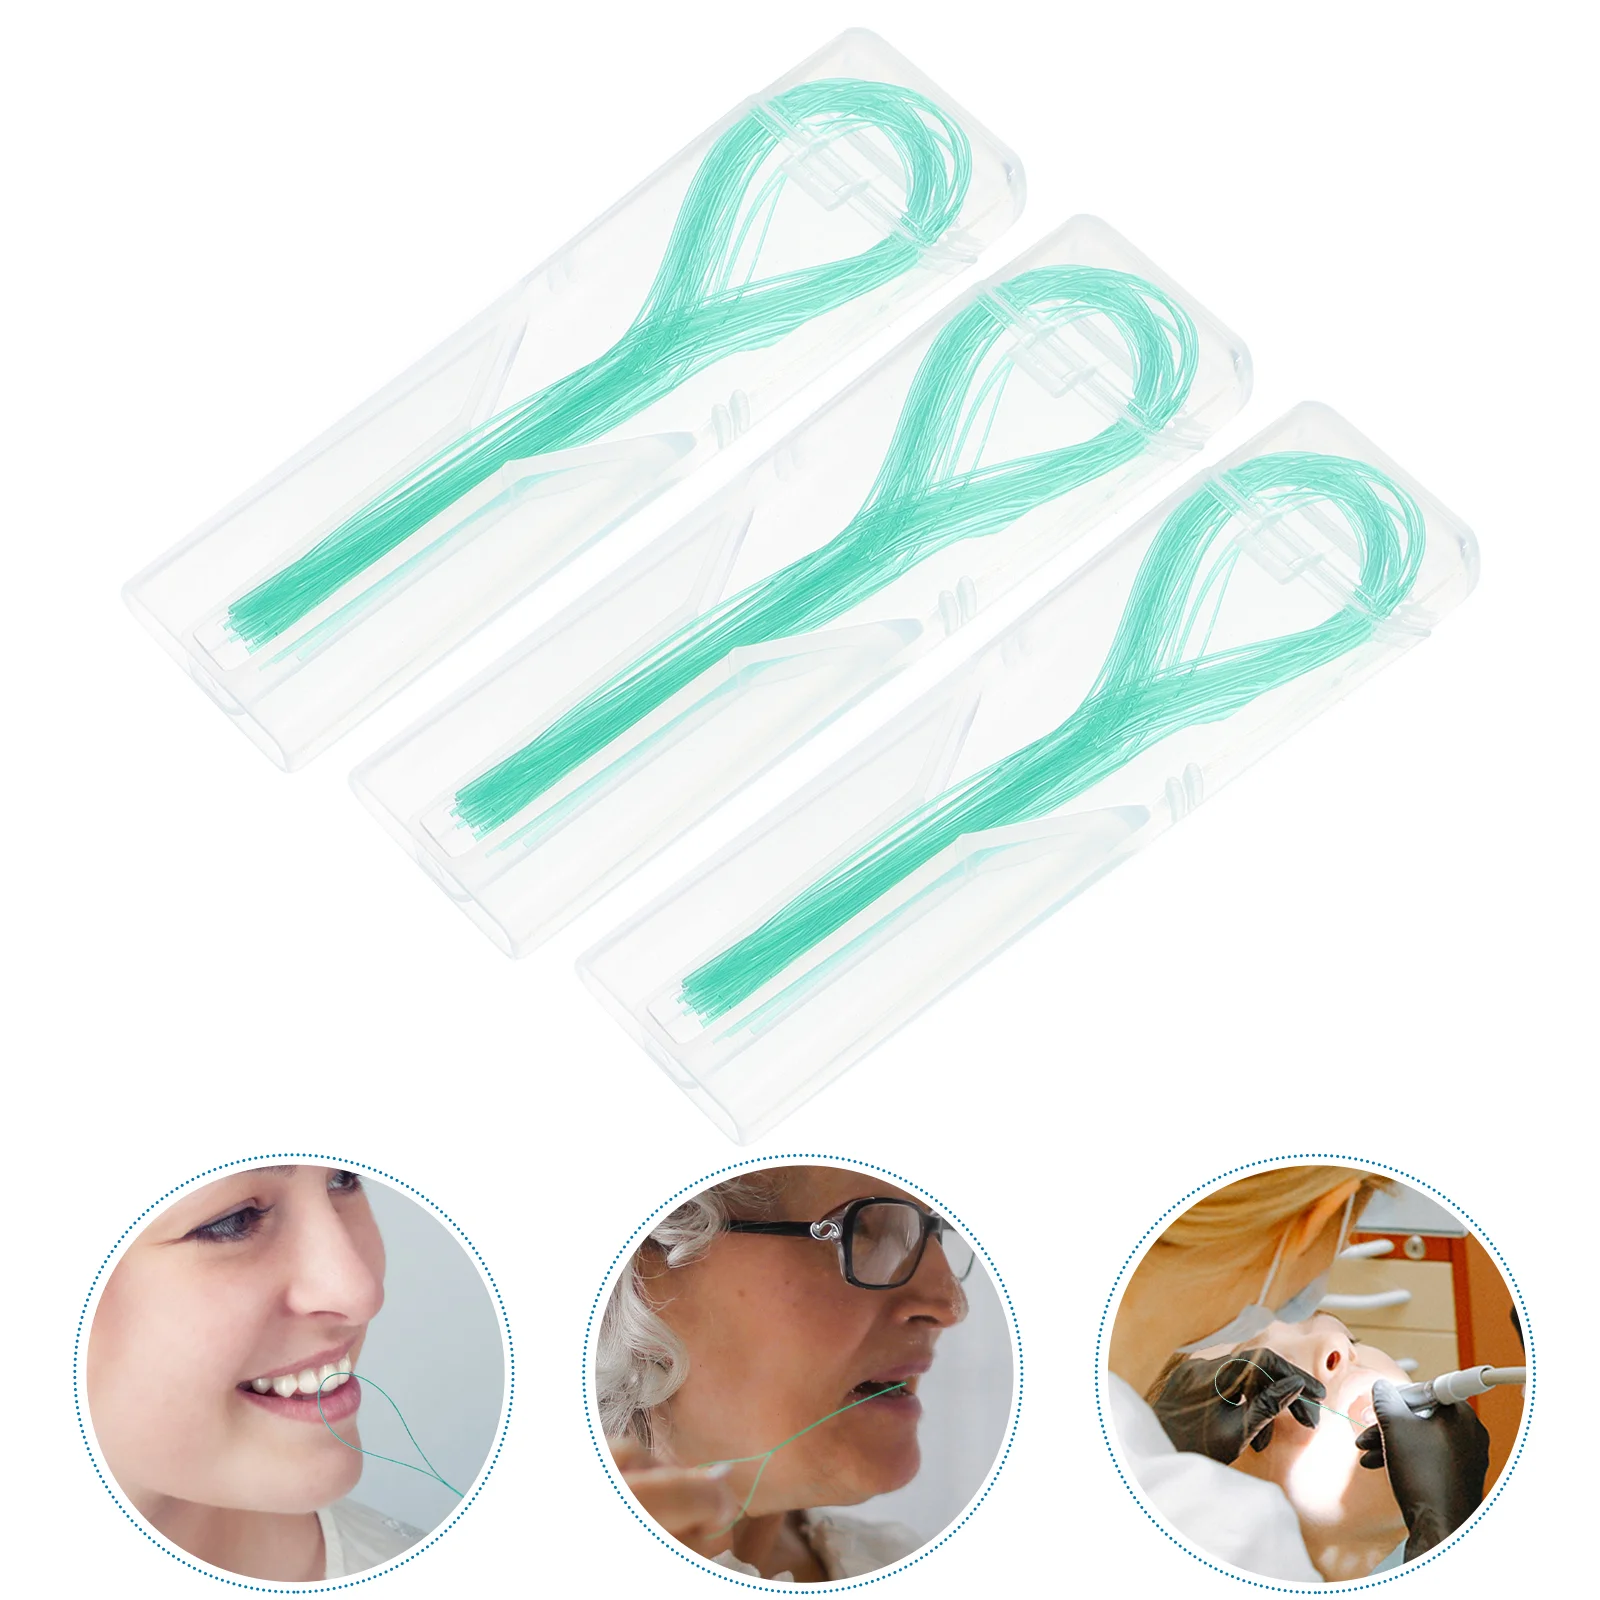 

105 Pcs Cleaning Toys Dental Floss Threading Threaders Teeth Pull Line Braces Bridges Professional